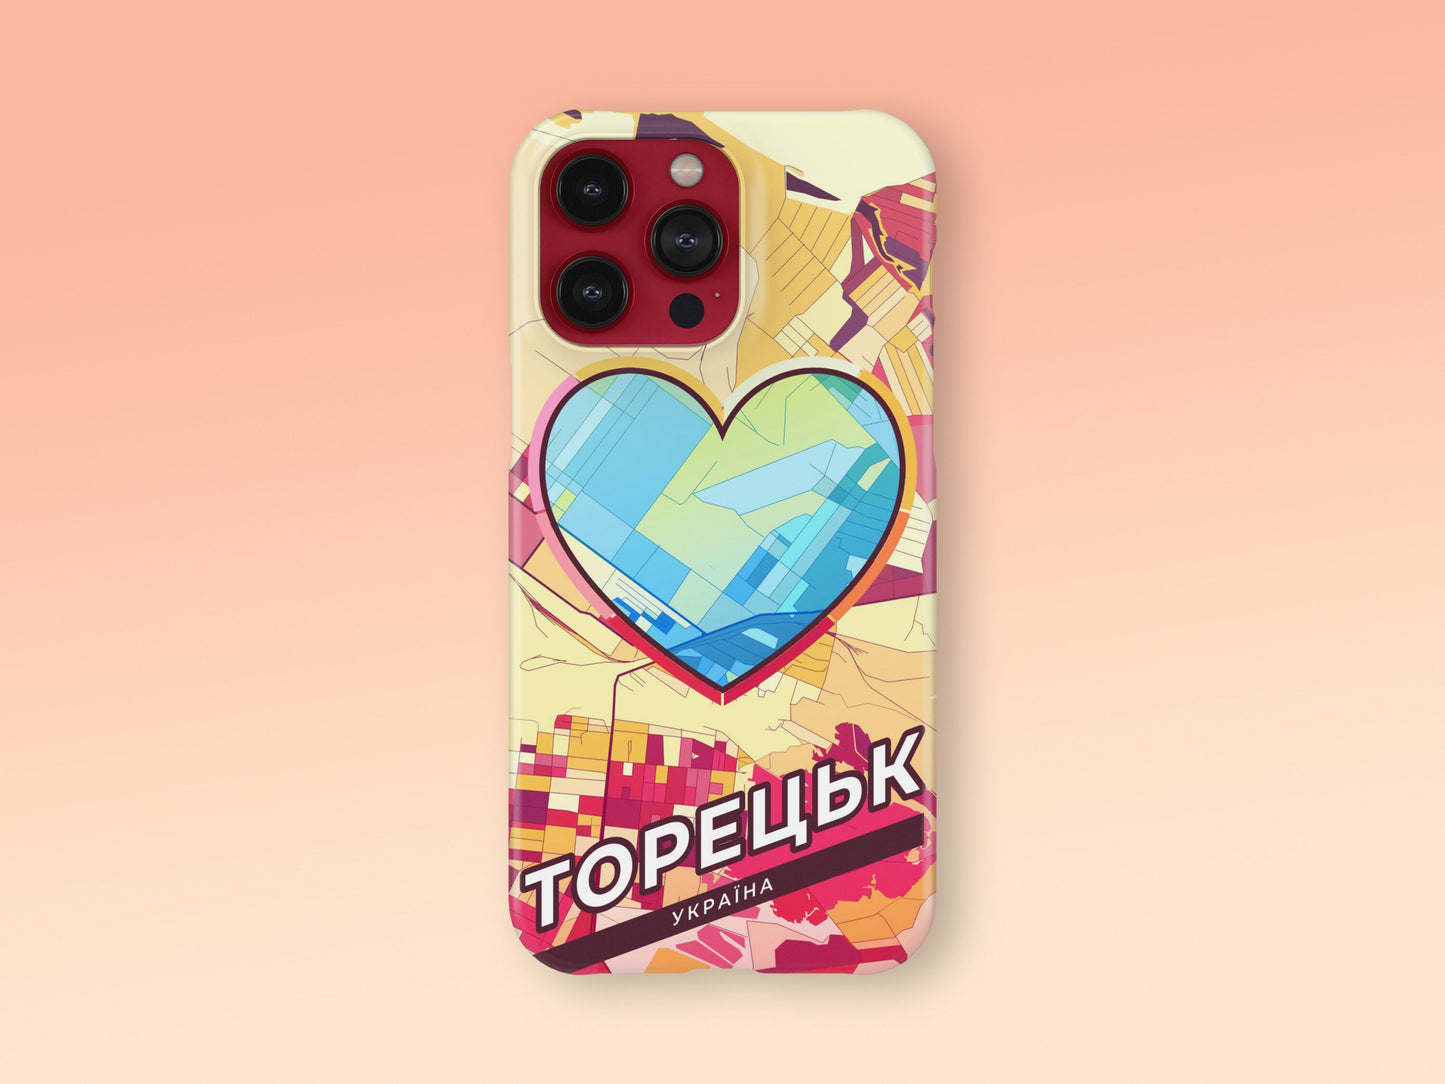 Toretsk Ukraine slim phone case with colorful icon 2